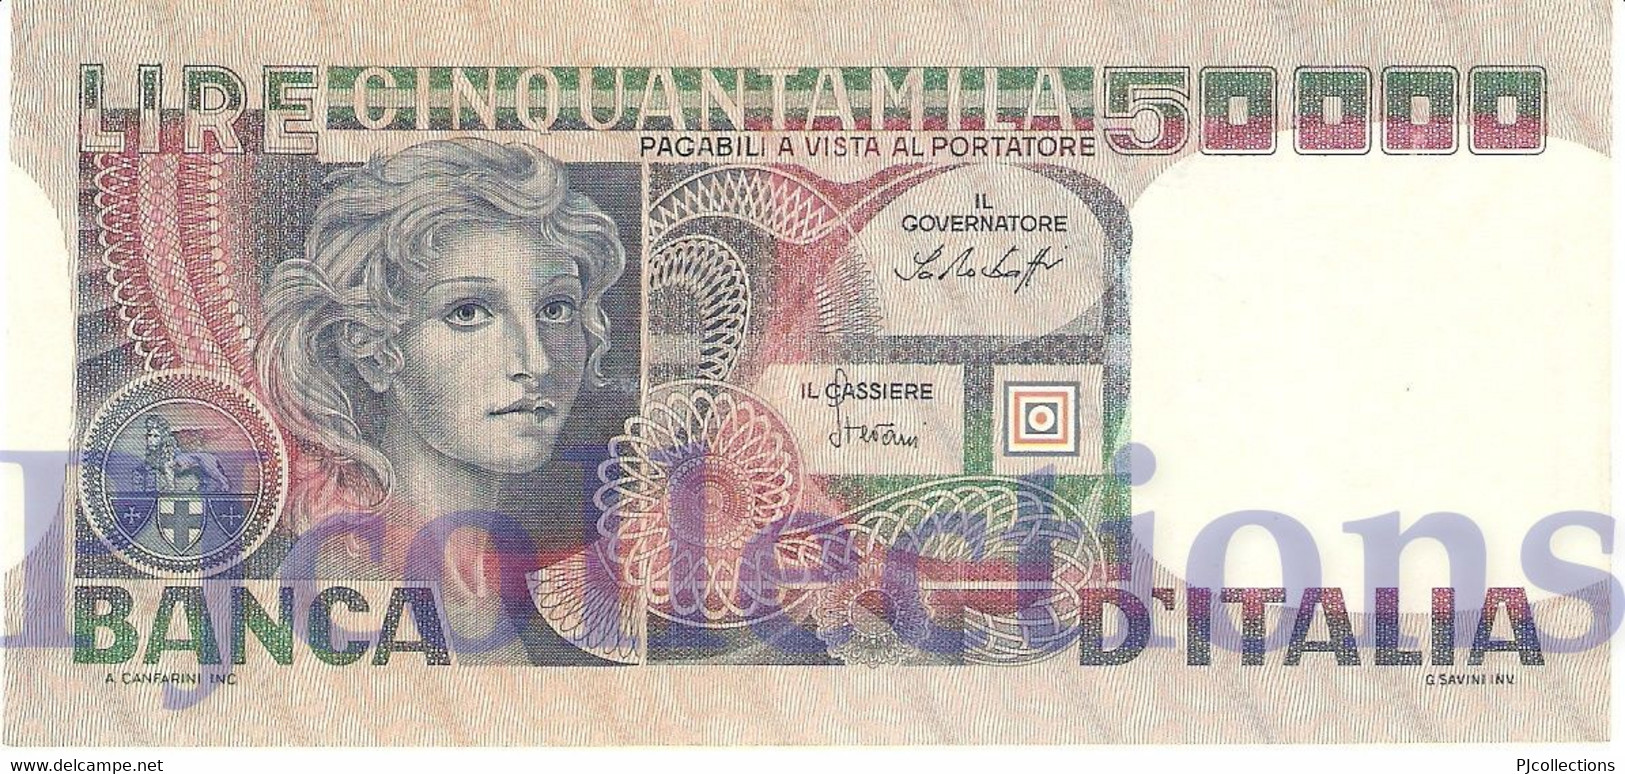 ITALY 50.000 LIRE 1977 PICK 107a AU - 50000 Lire